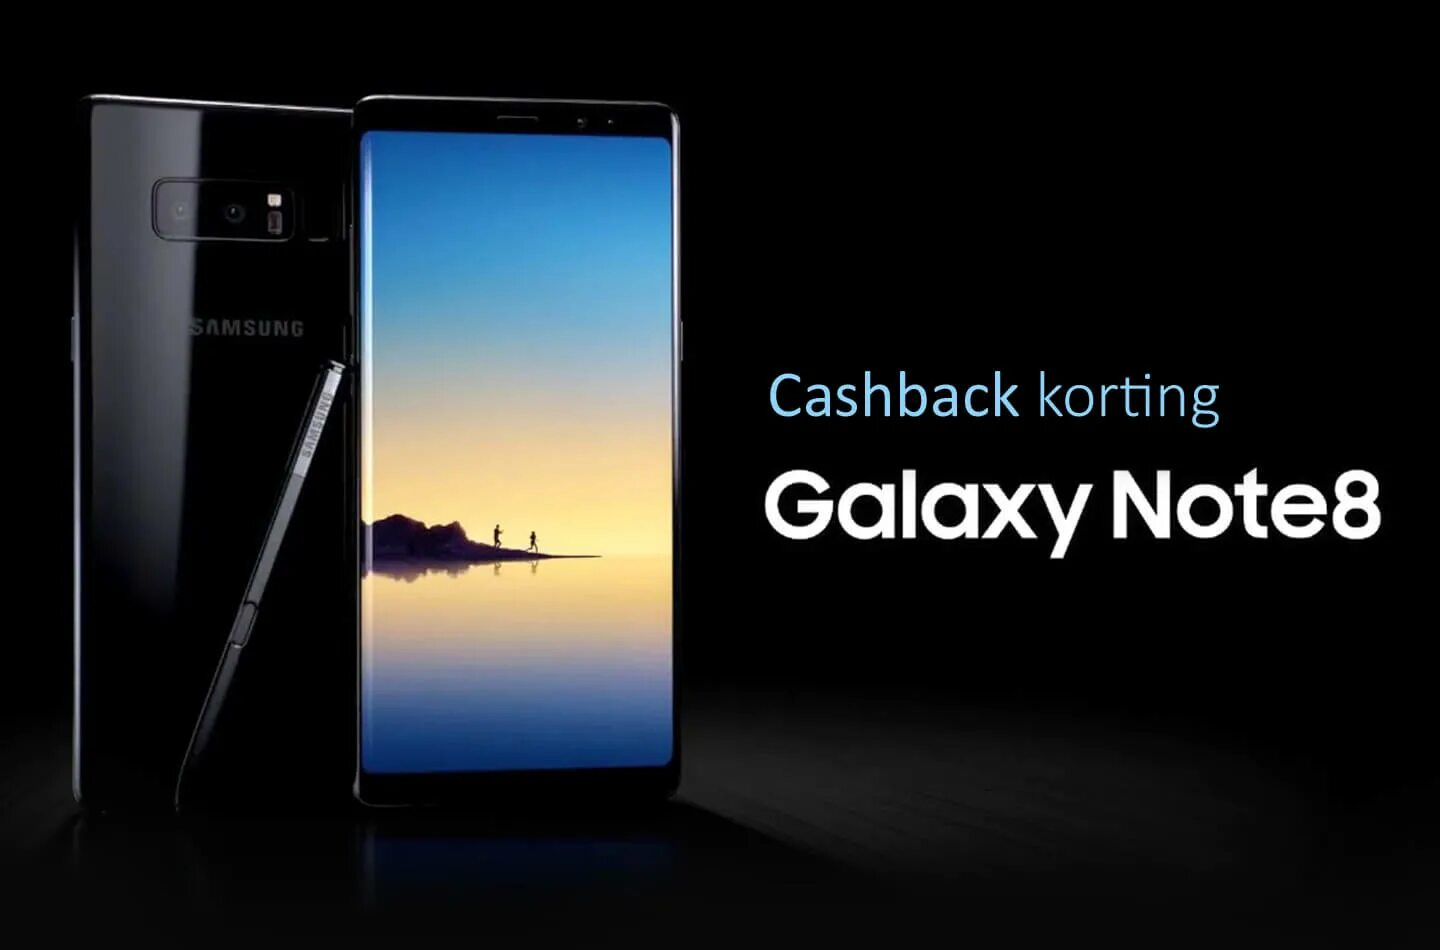 Note 8 звук. Samsung Galaxy s8 Note. Самсунг галакси нот 8. Samsung Galaxy Note 8 Plus. Samsung Galaxy Note 8 (черный).